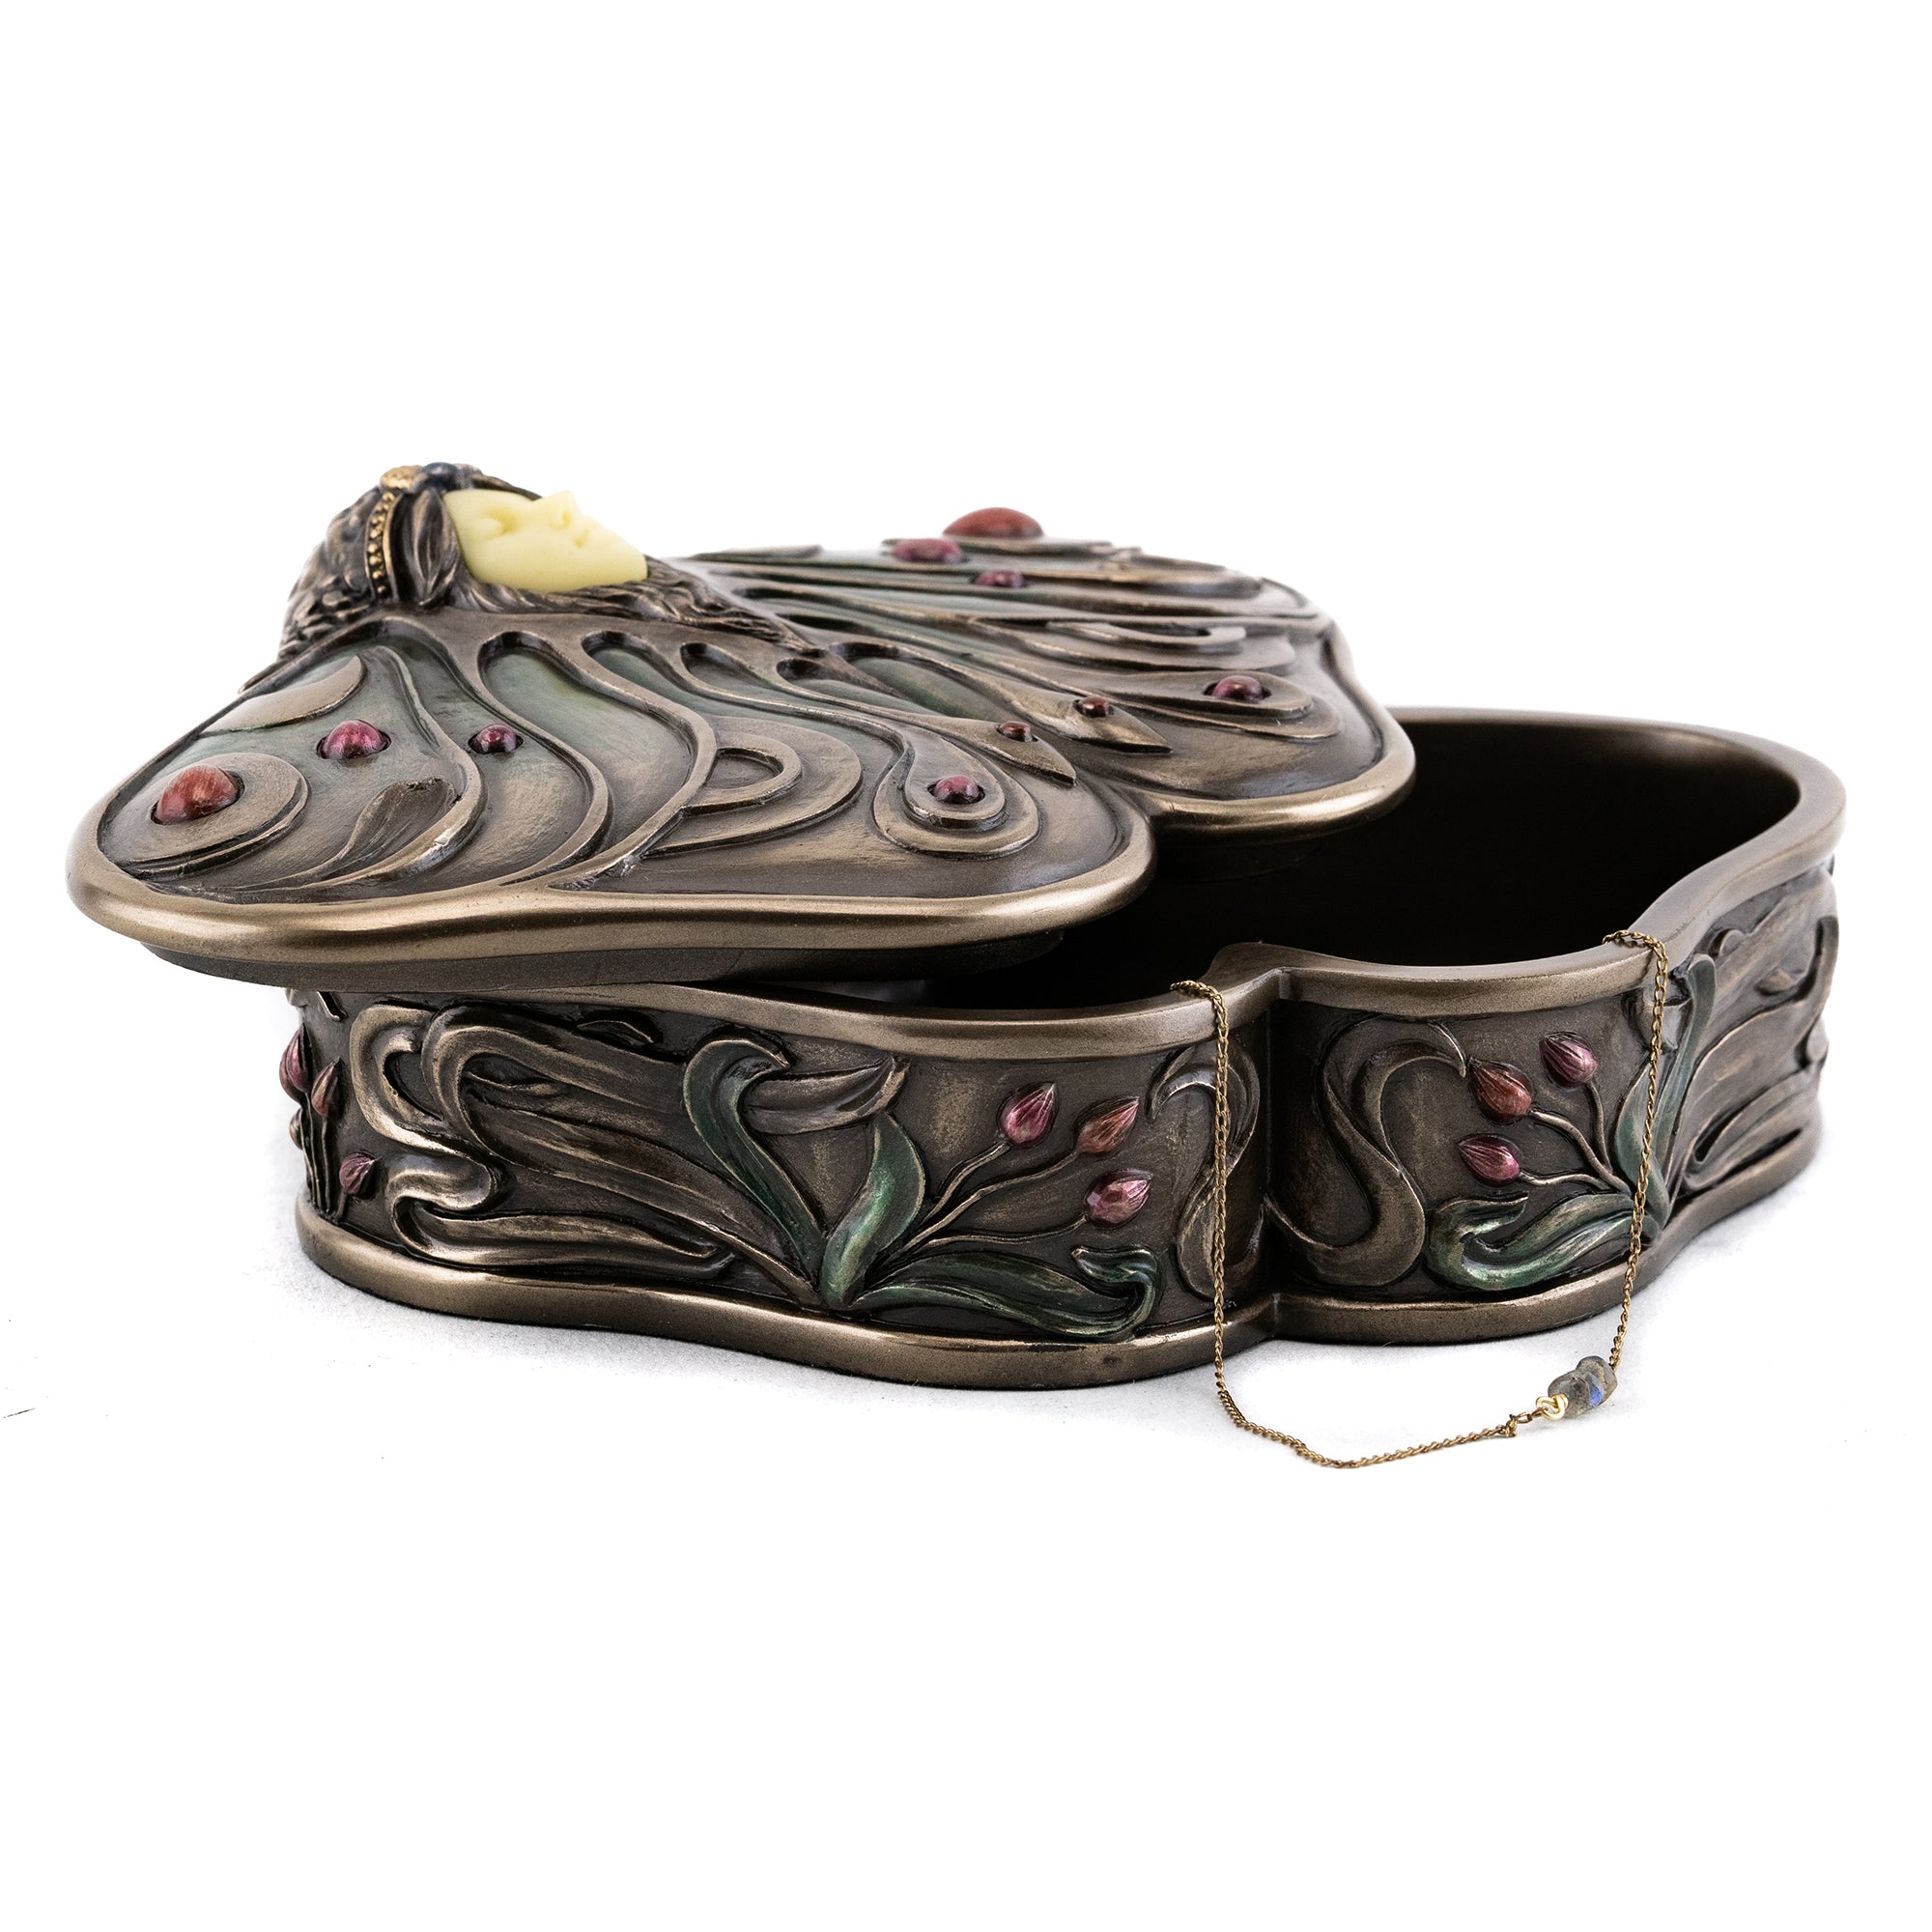 Art Nouveau Princess Jewelry Box